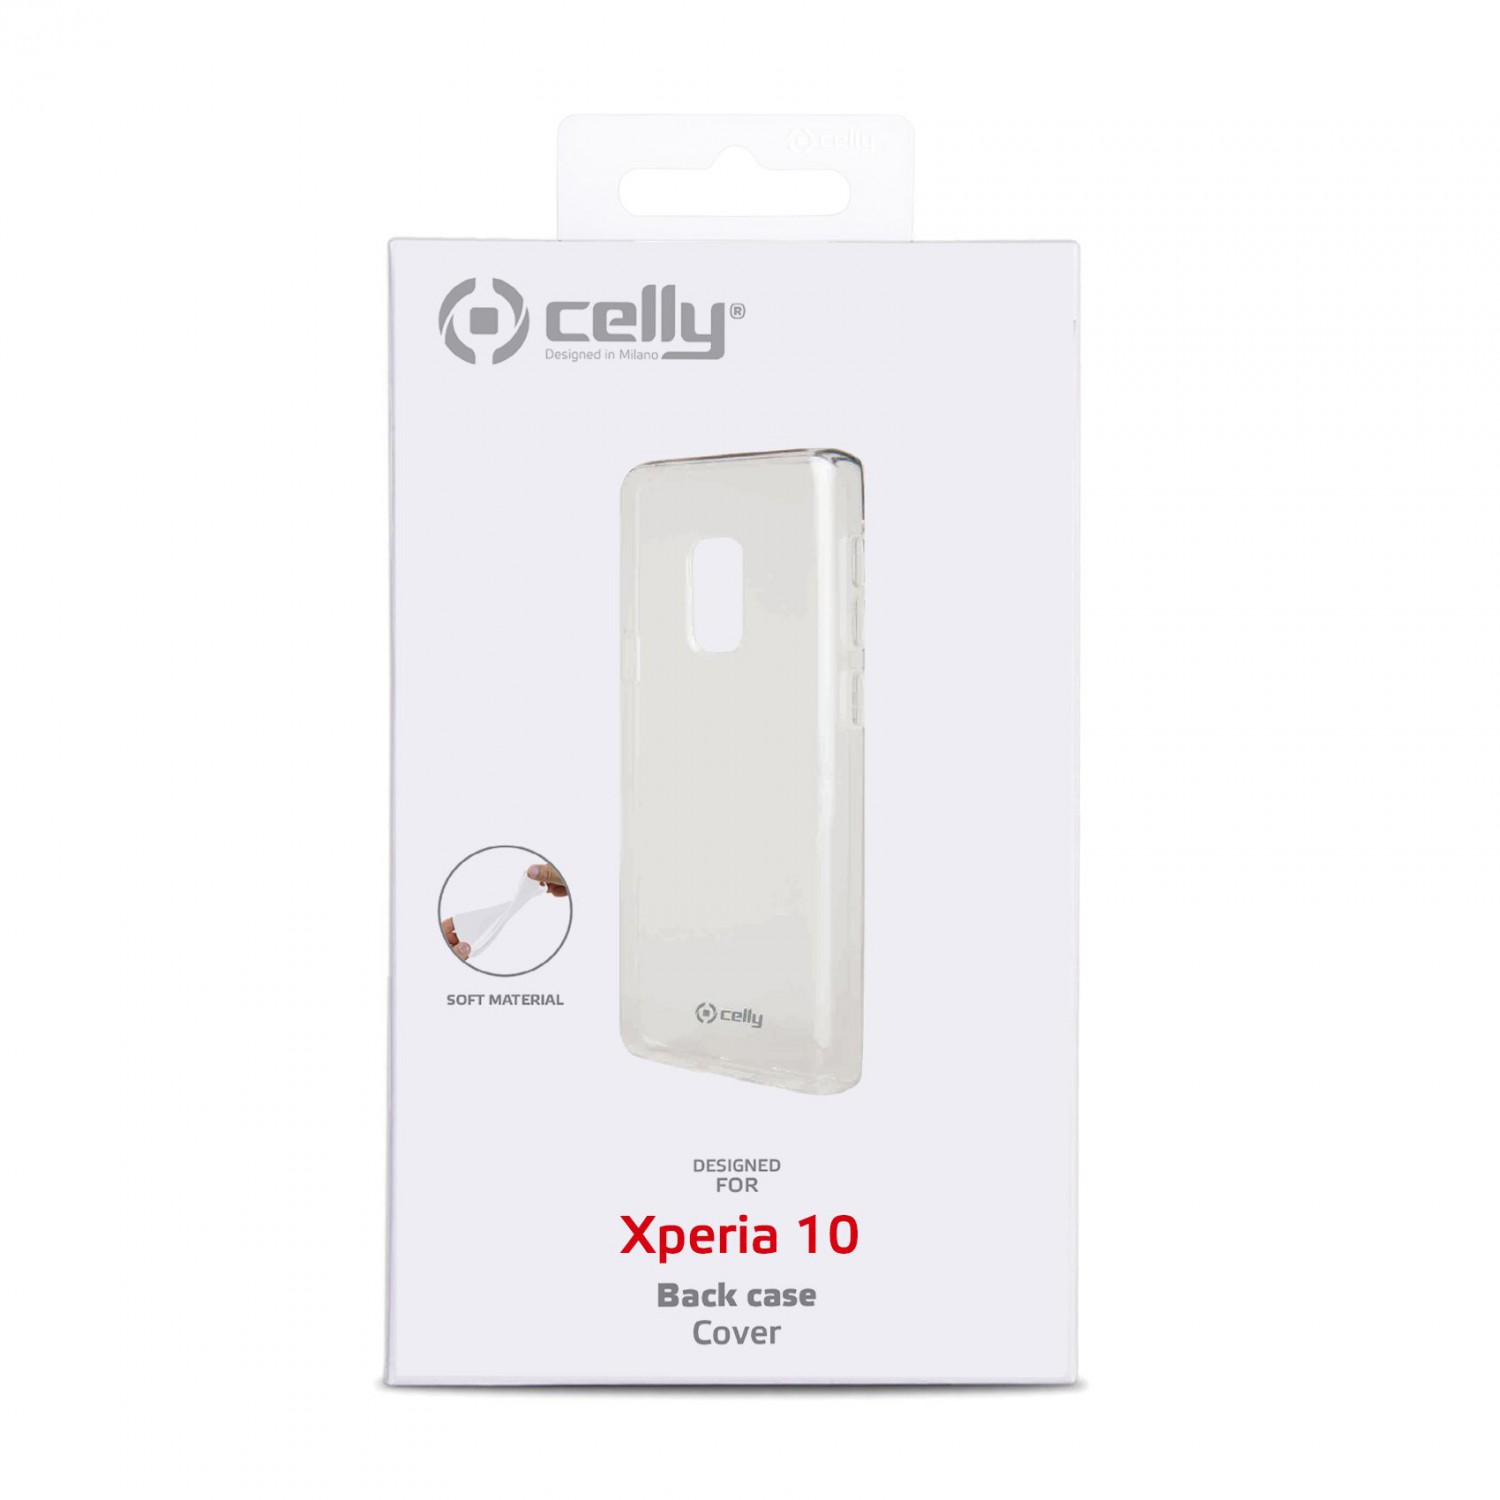 Silikonové pouzdro CELLY Gelskin pro Sony Xperia 10, bezbarvé